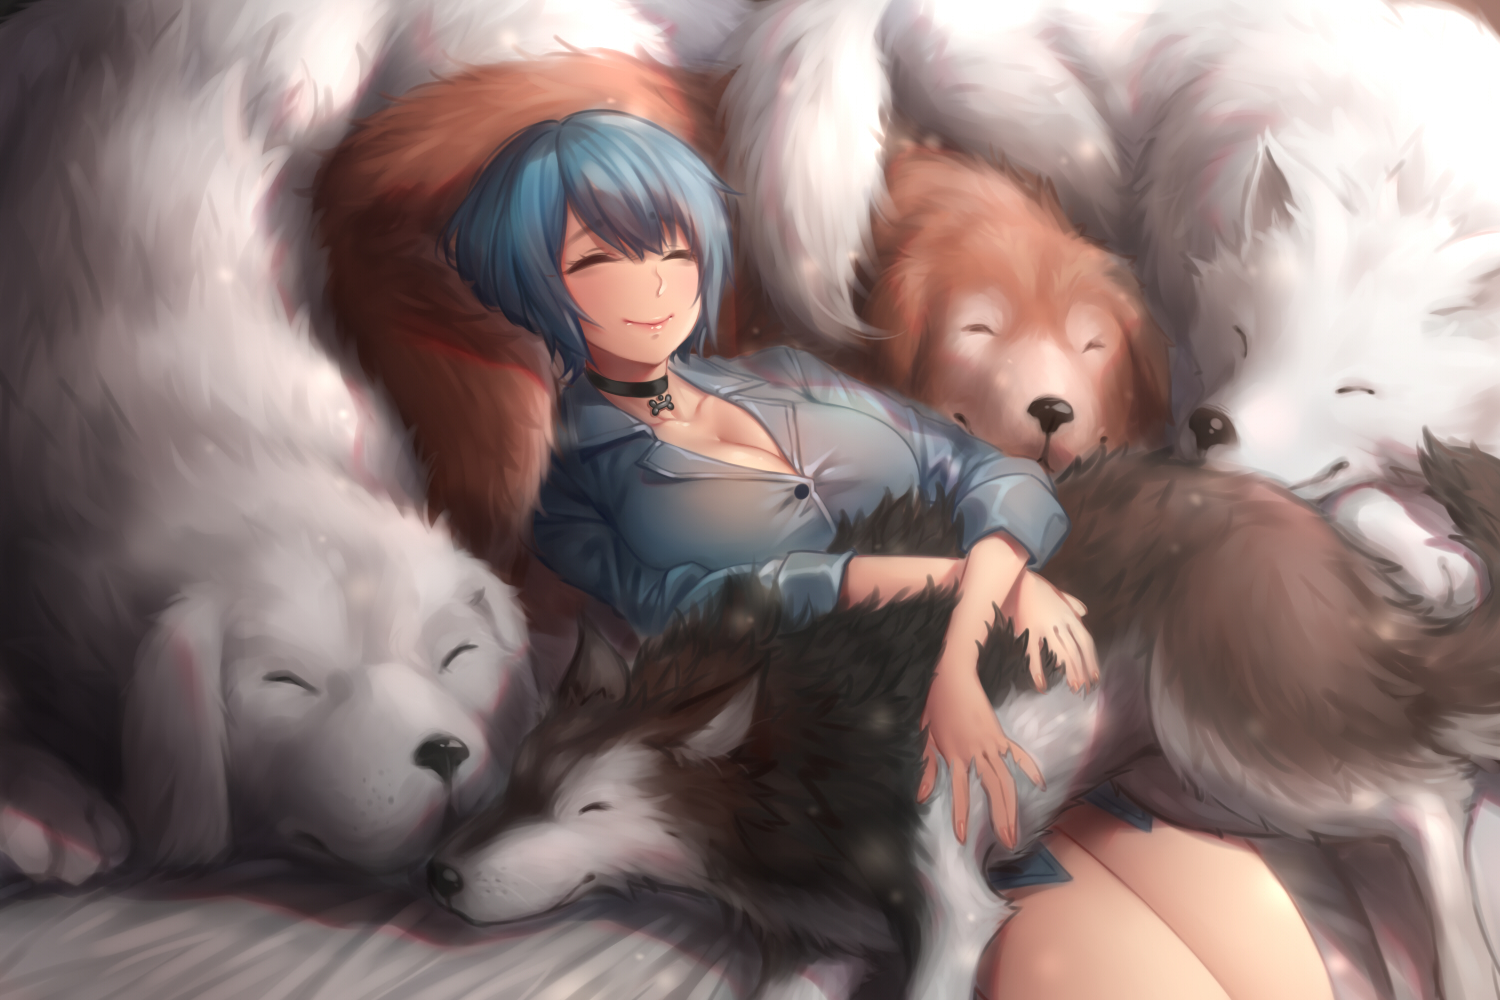 Anime 1500x1000 Yin-ting Tian curvy anime girls dog animals closed eyes sleeping smiling blue hair cleavage